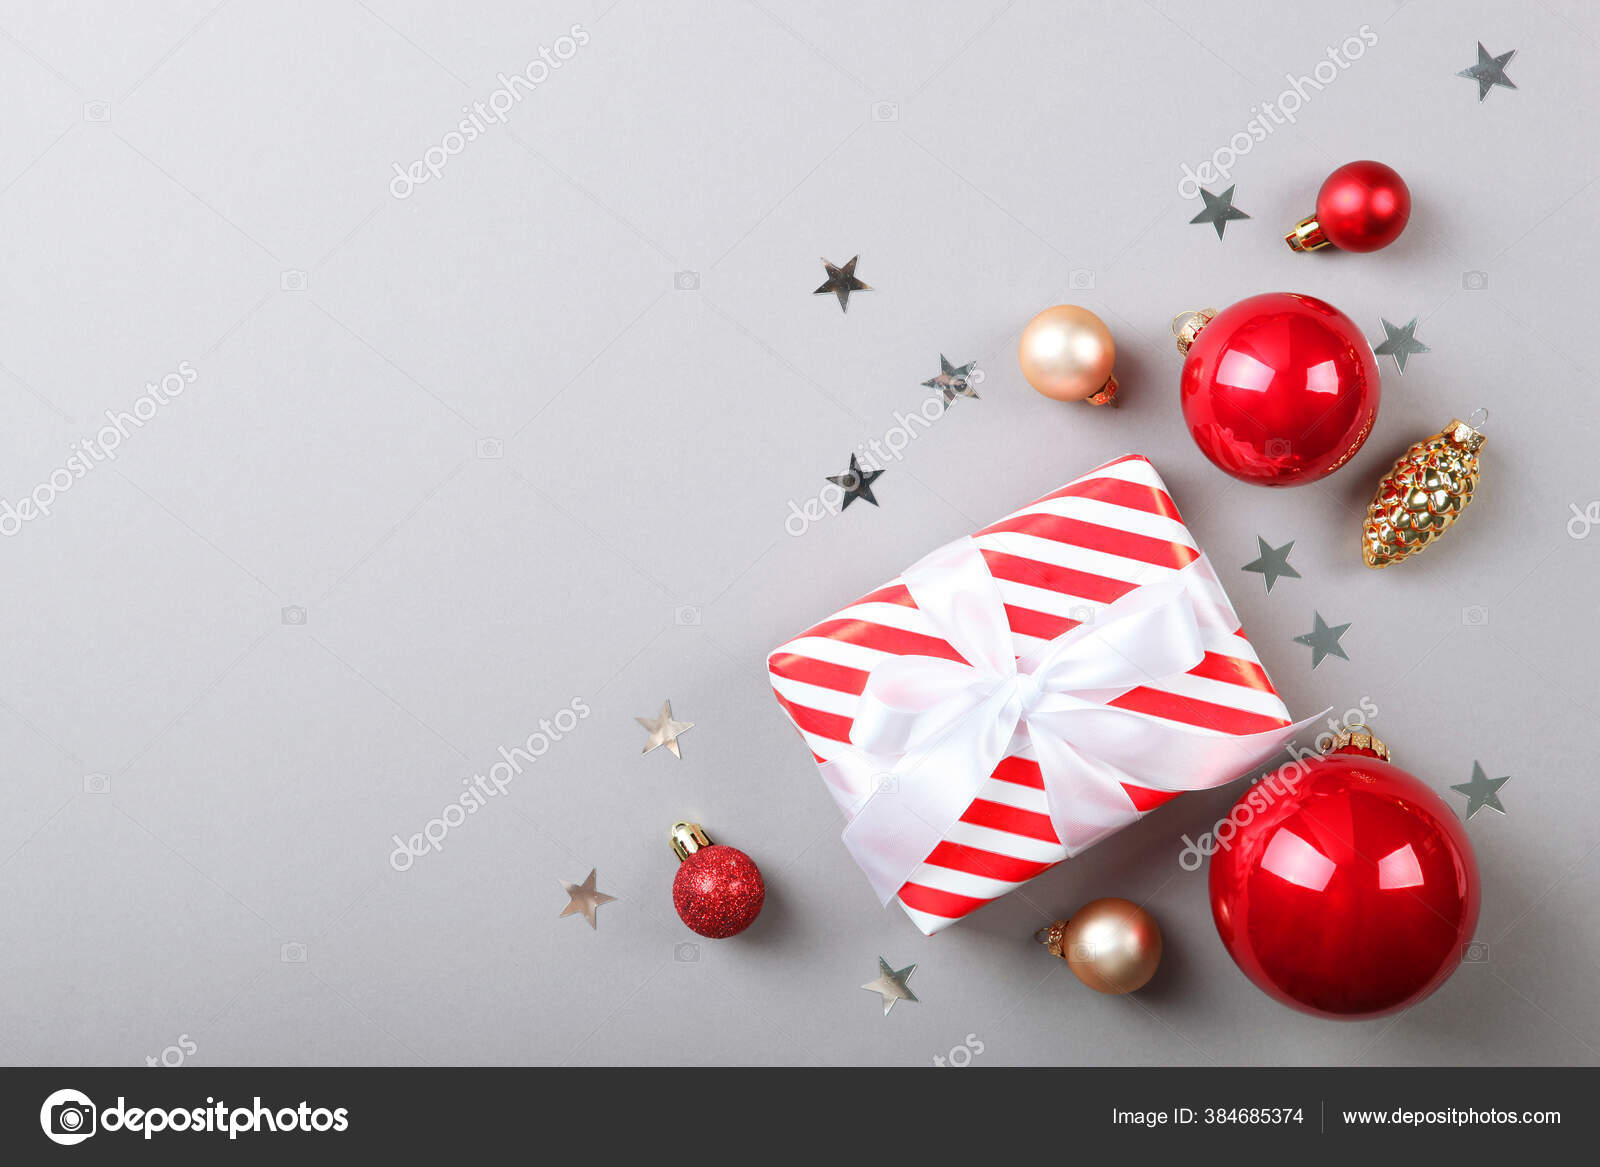 https://st4.depositphotos.com/17369252/38468/i/1600/depositphotos_384685374-stock-photo-christmas-new-year-accessories-top.jpg